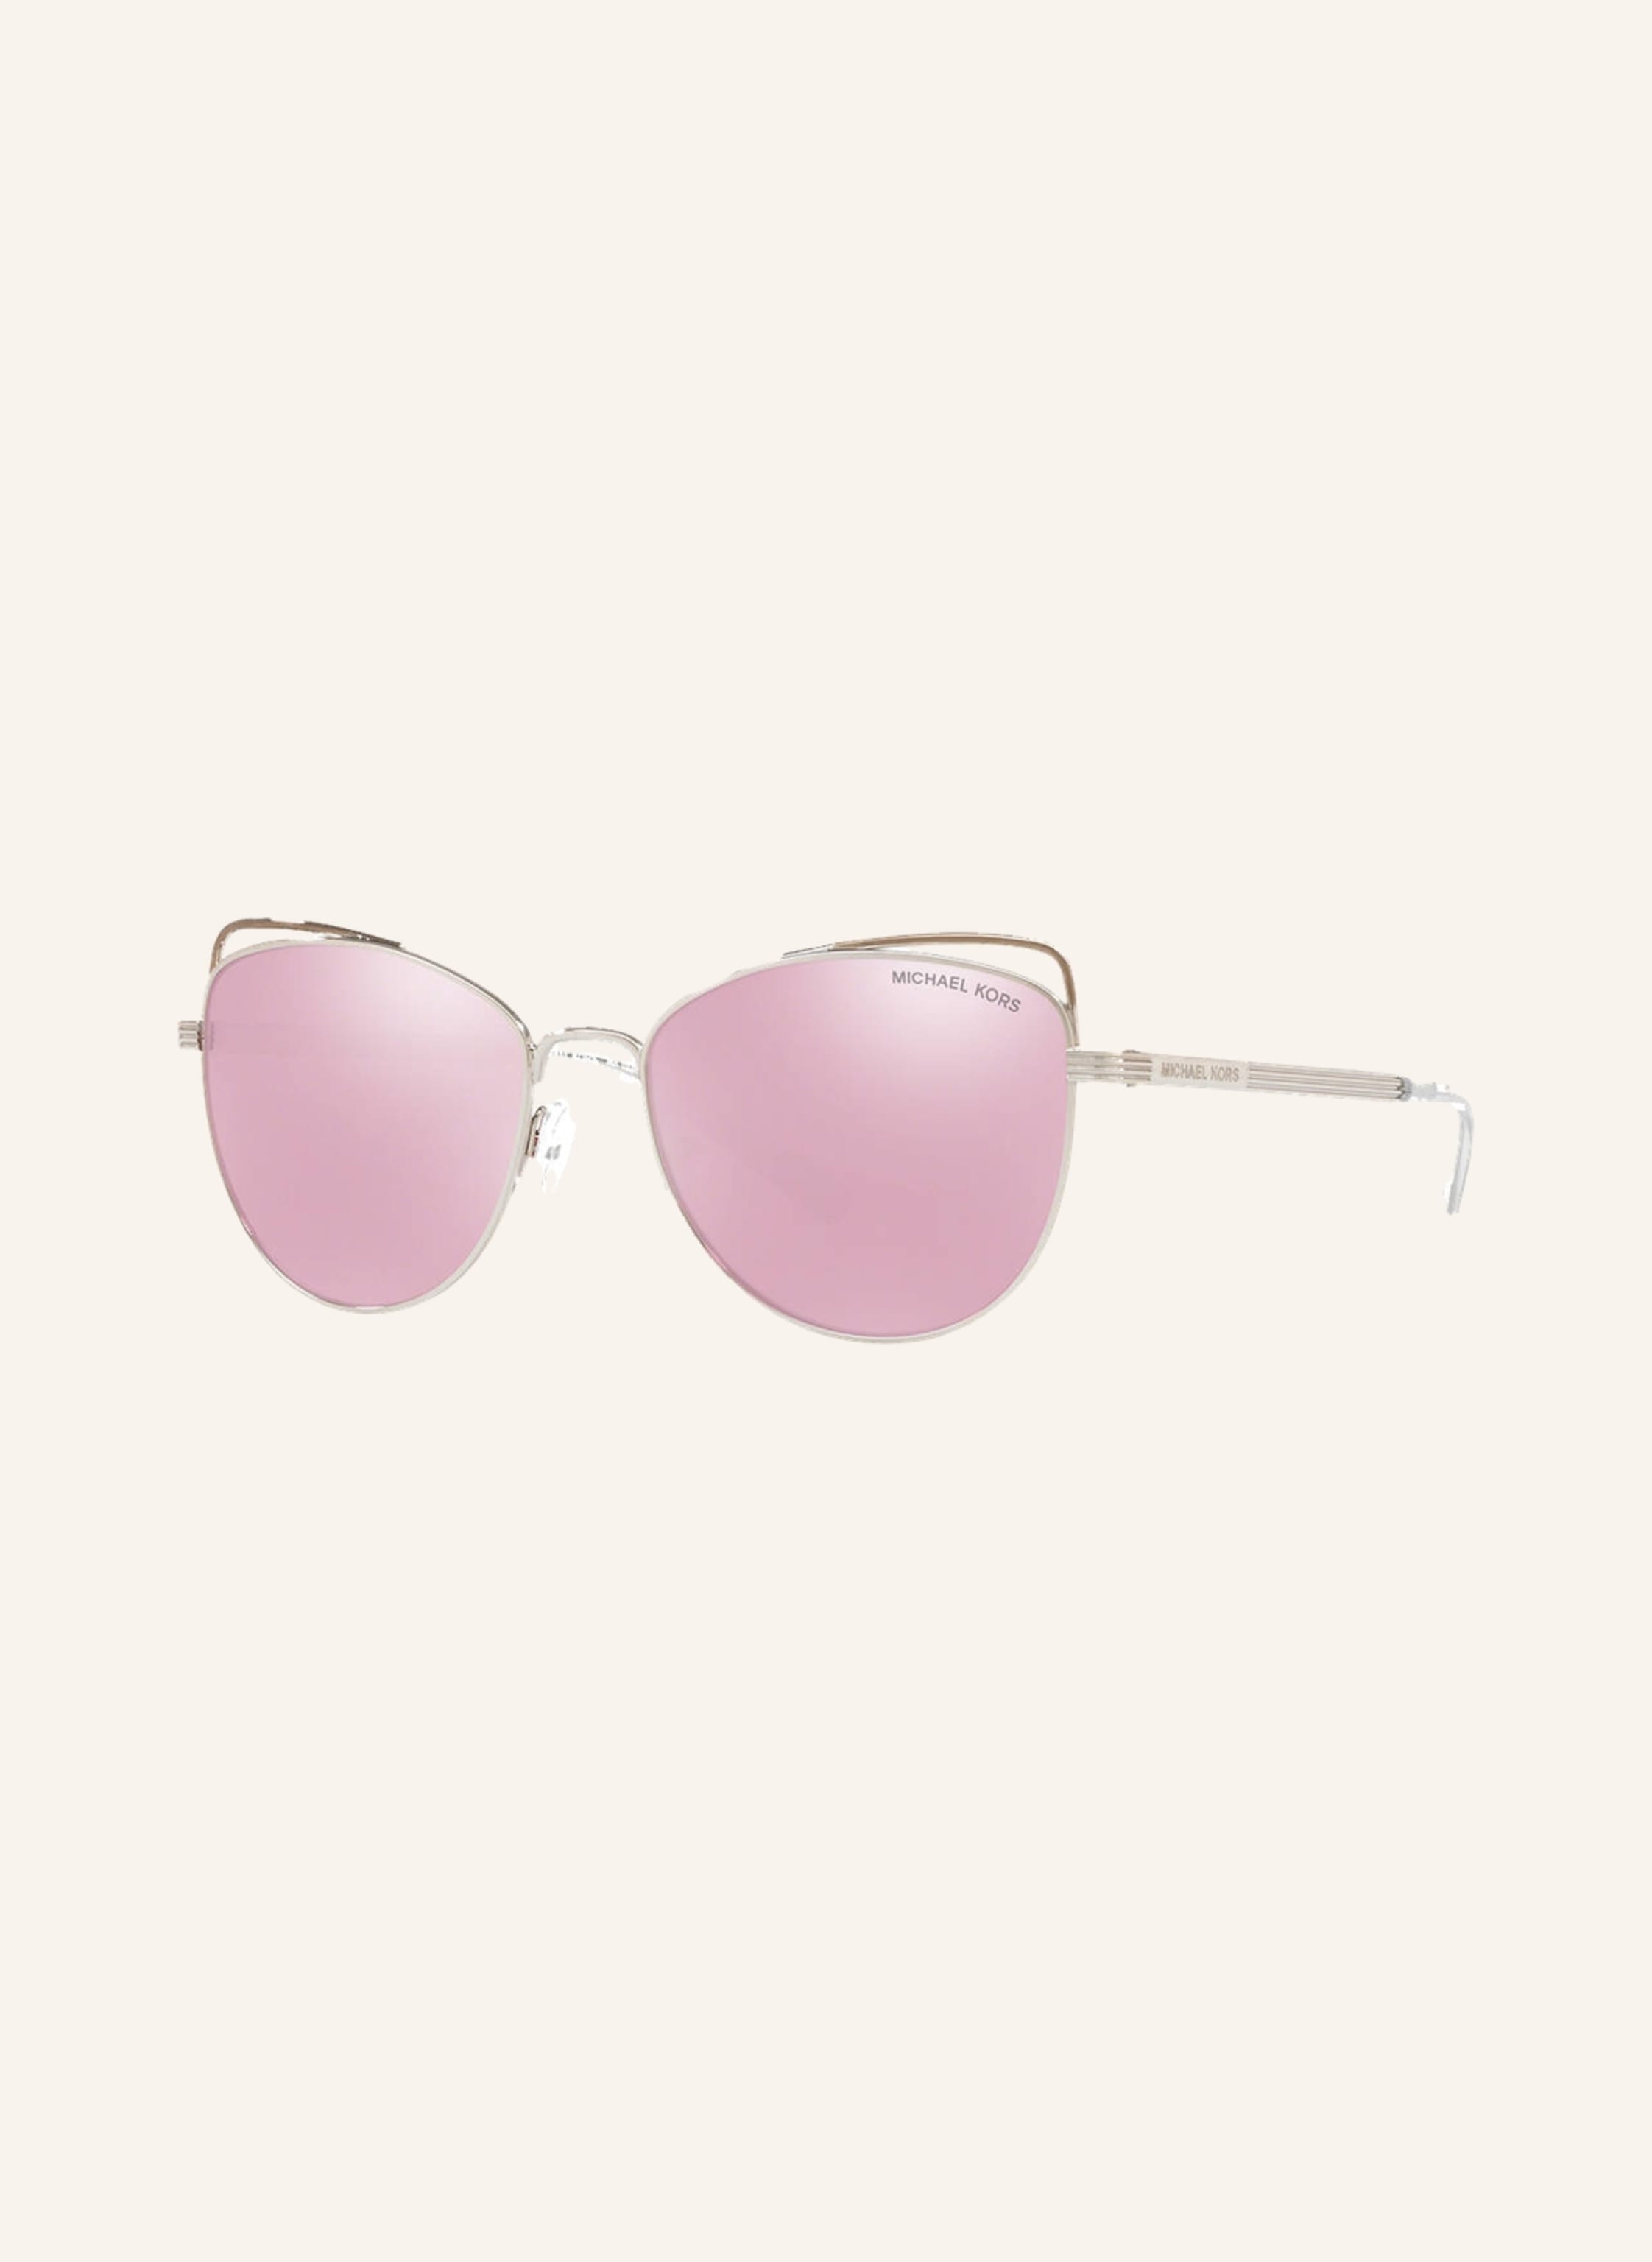 Michael Kors Sunglasses MK5004 Chelsea 10034V  Best Price and Available as  Prescription Sunglasses